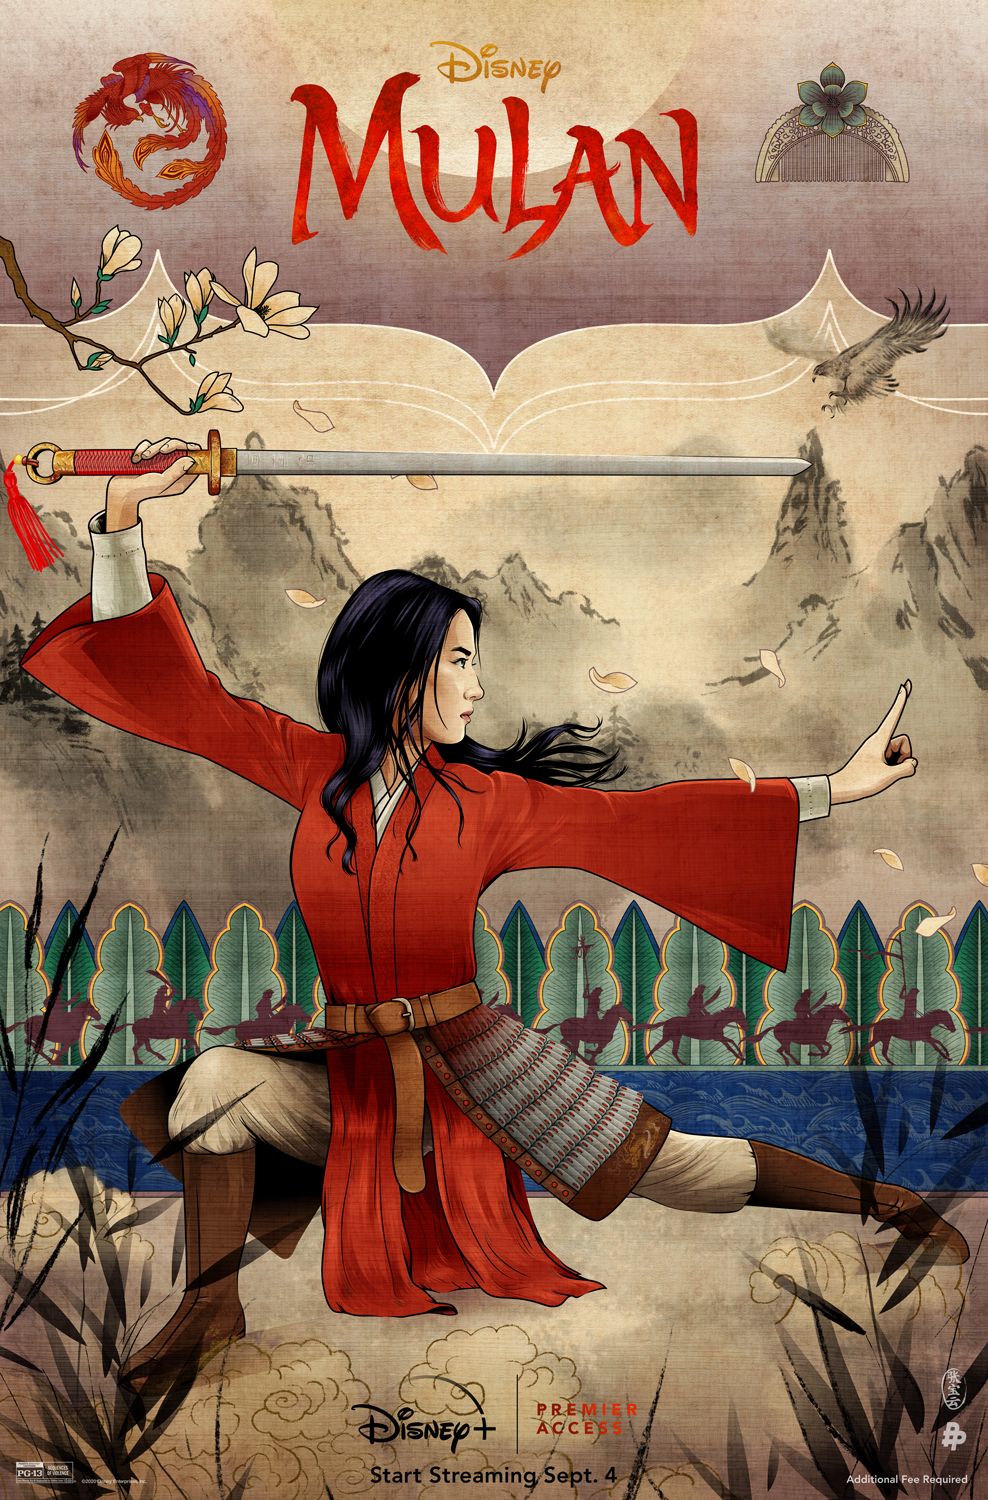 Artwork by Mulan